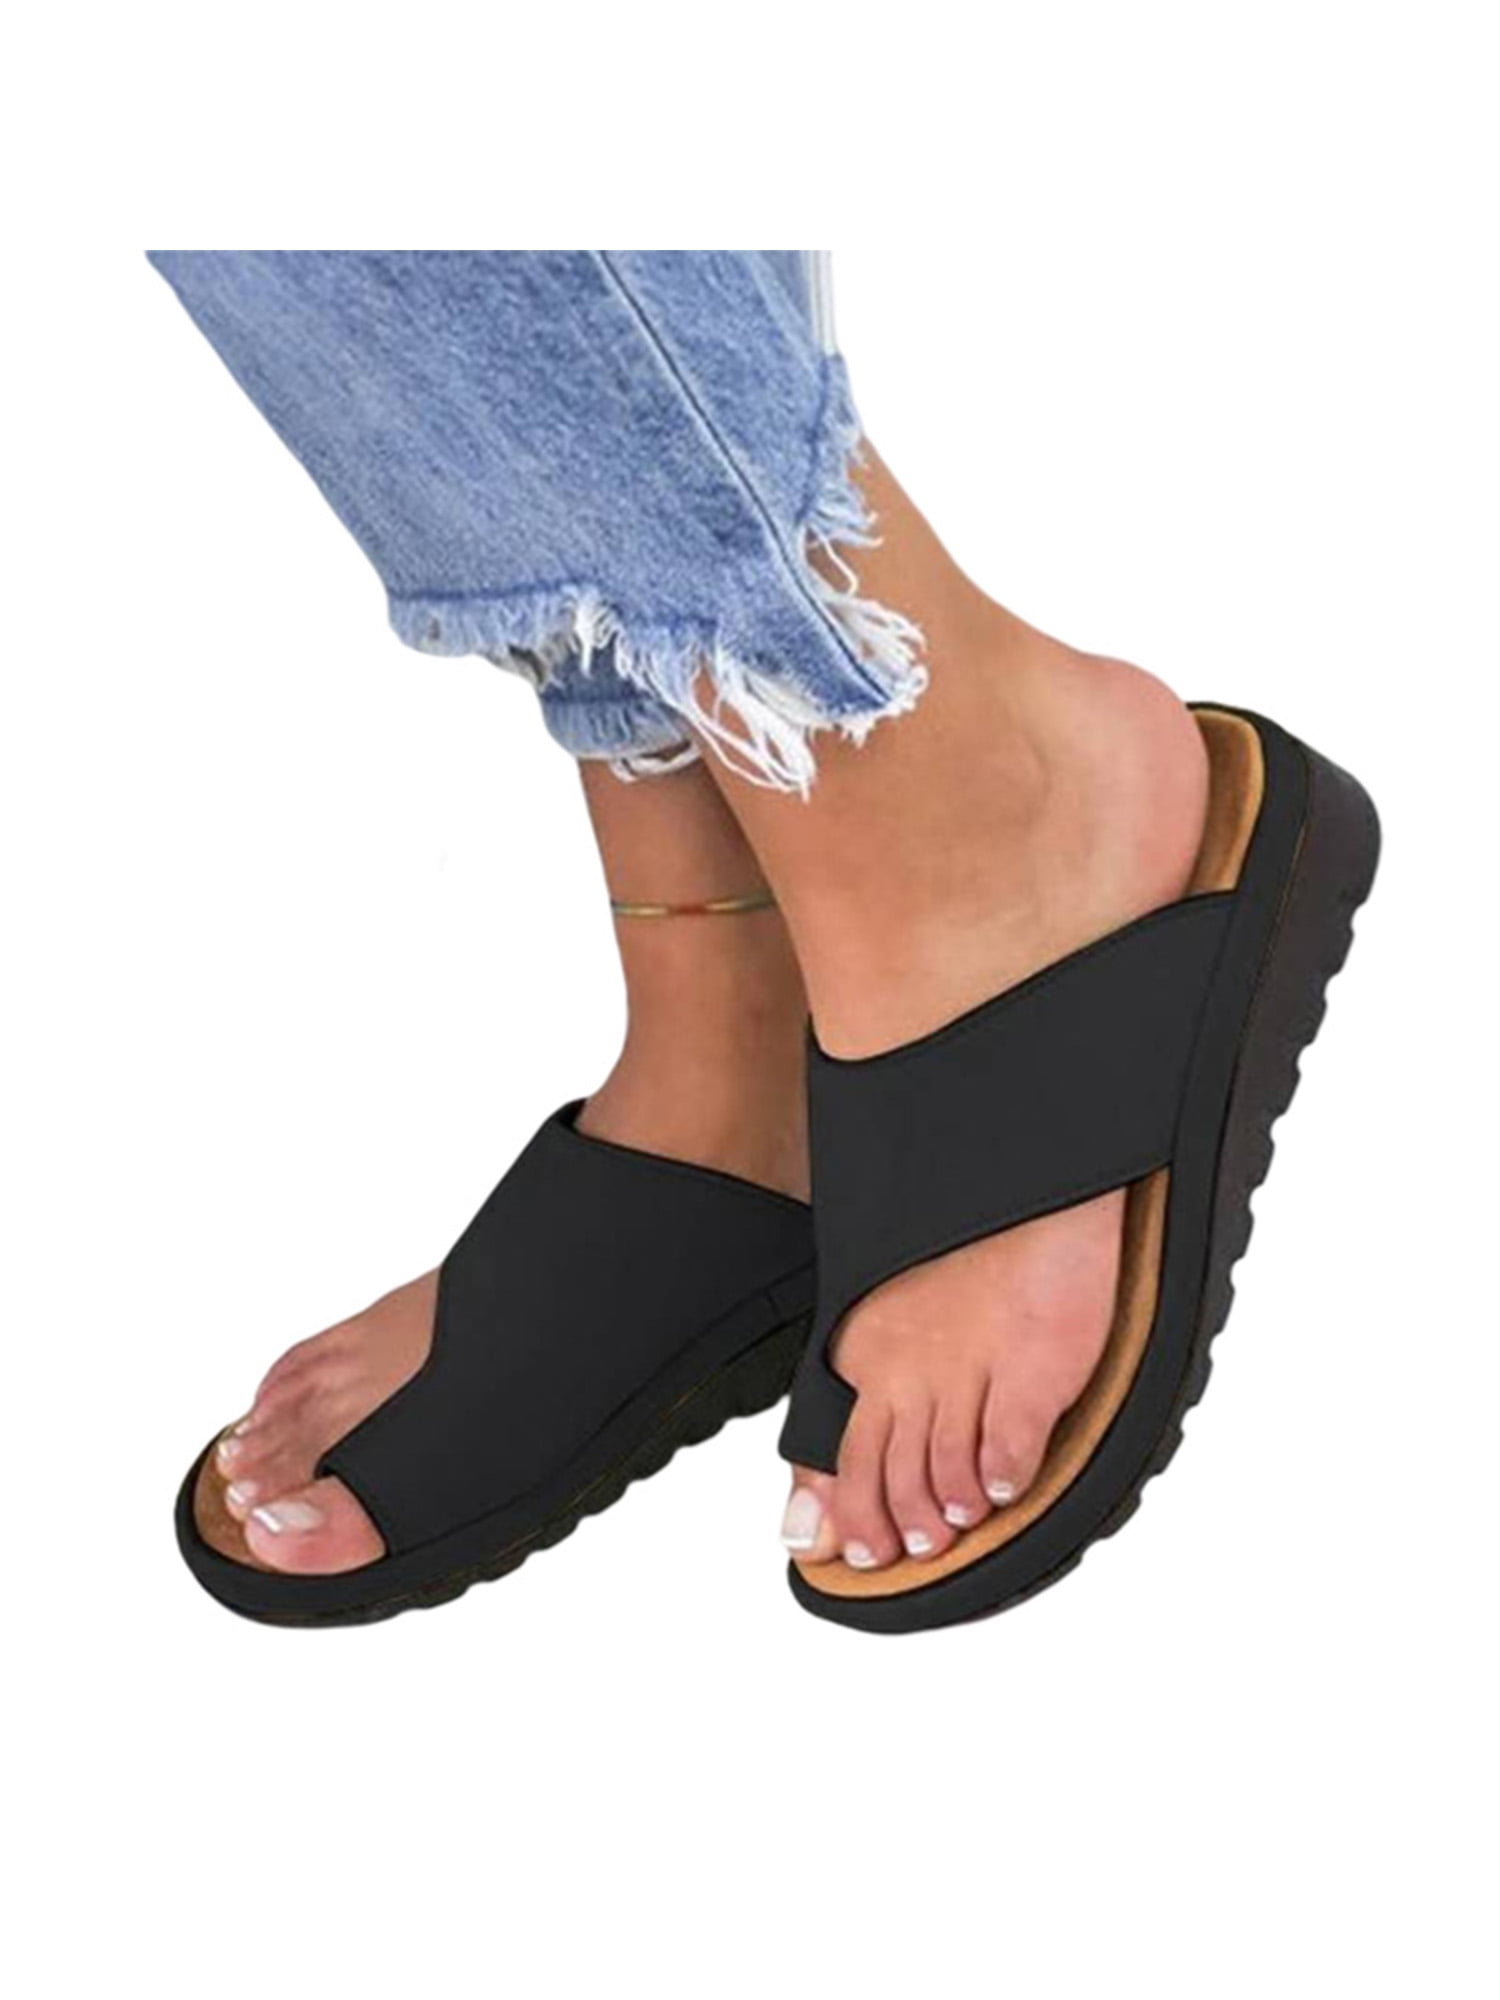 Gibobby Sandals for Women Wide Width,2019 New Comfy Platform Sandal Summer Beach Shoes Ladies Slippers Flip Flops 